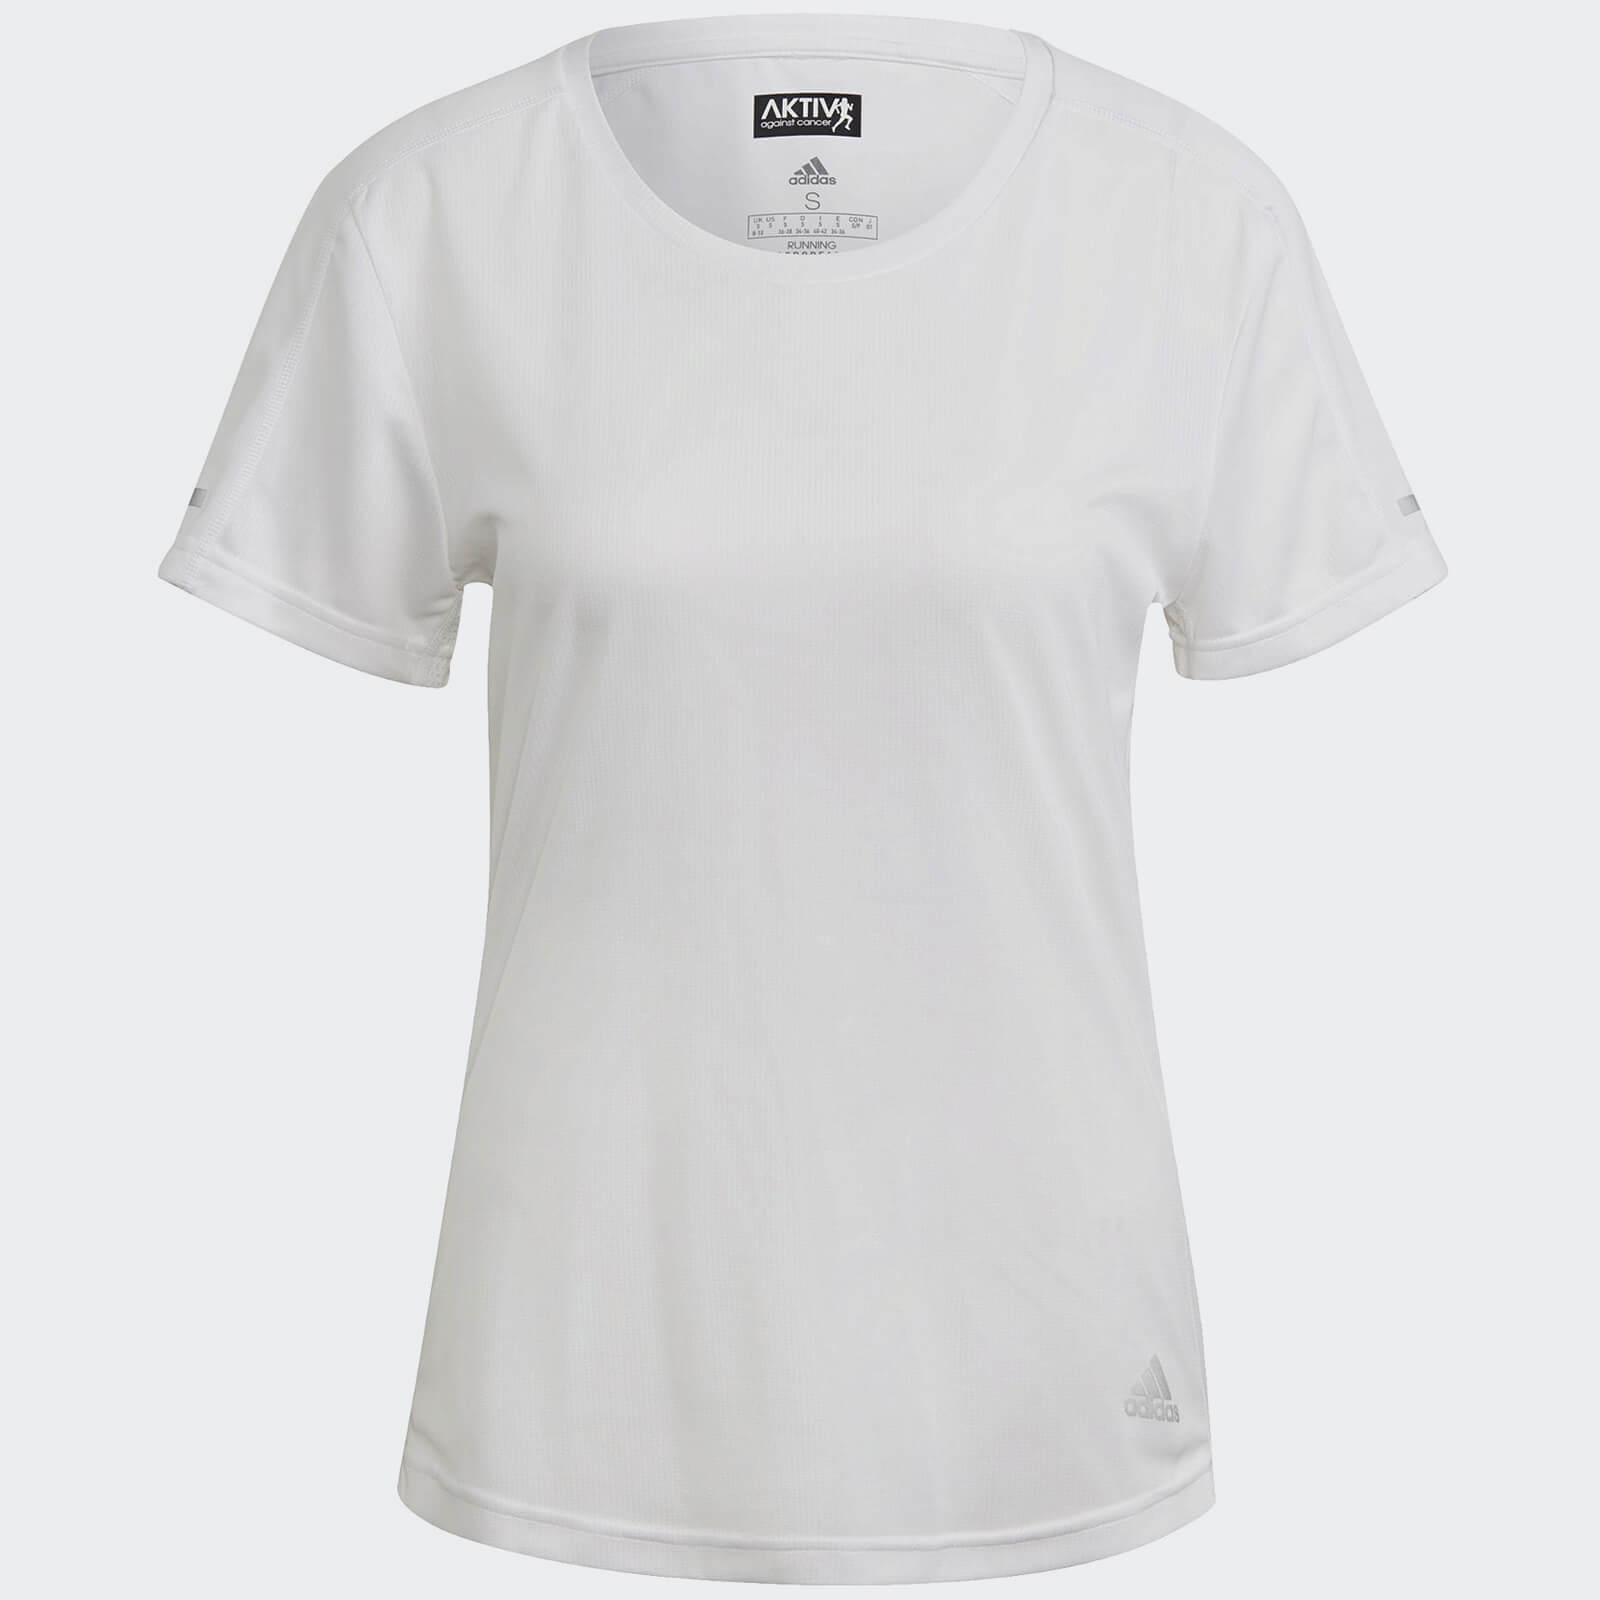 Adidas Women's Run It T-Shirt - White - XS